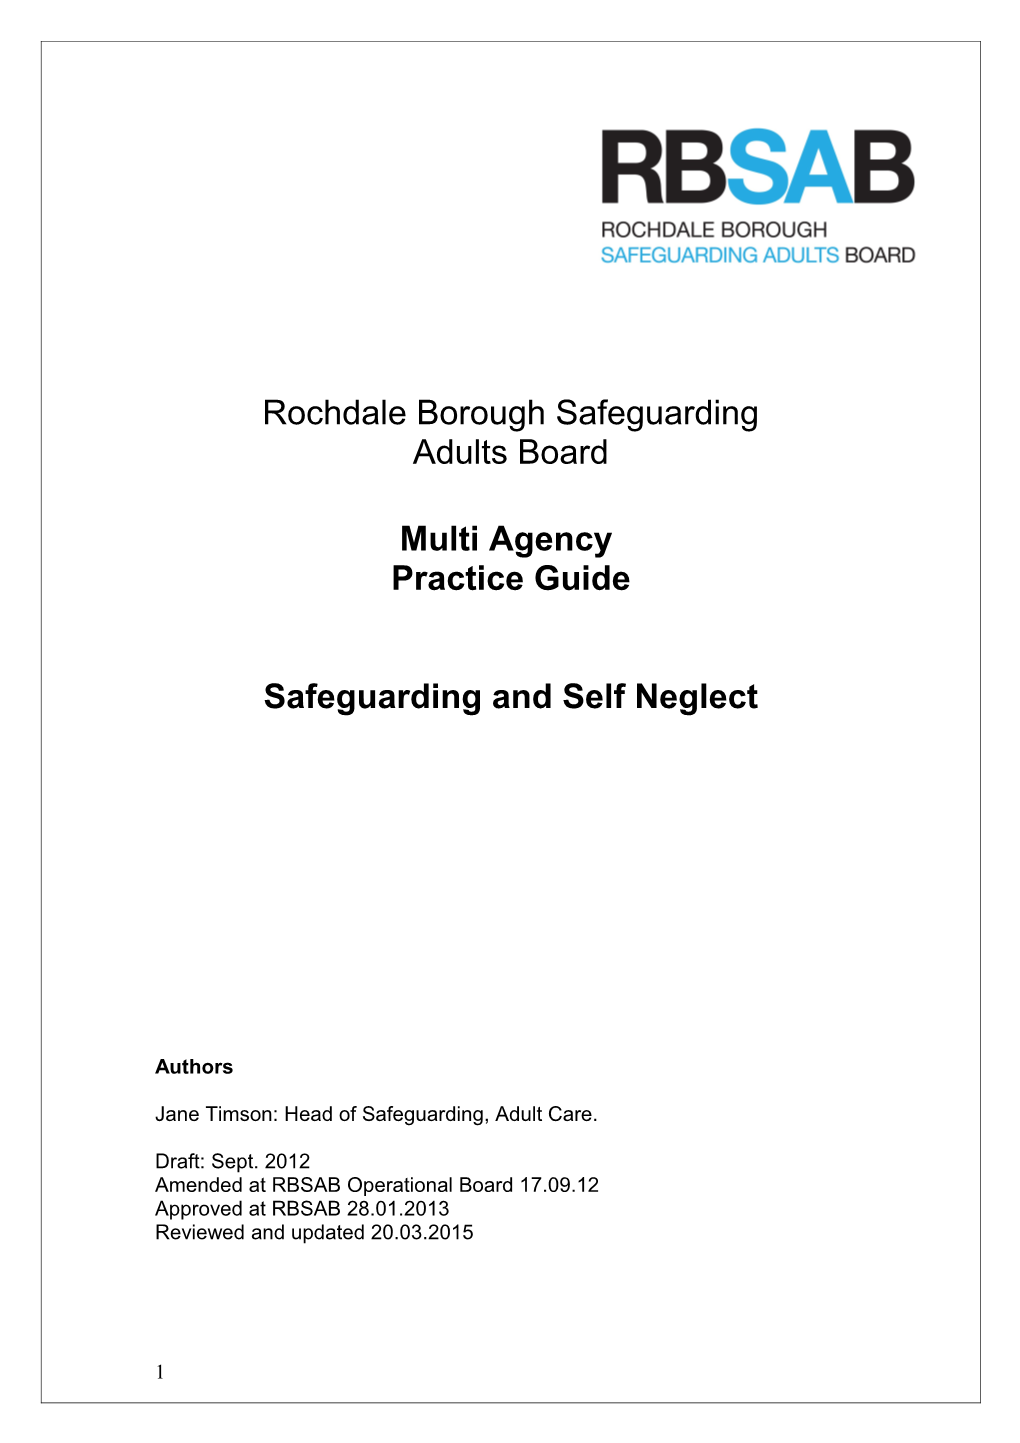 Safeguarding and Self Neglect